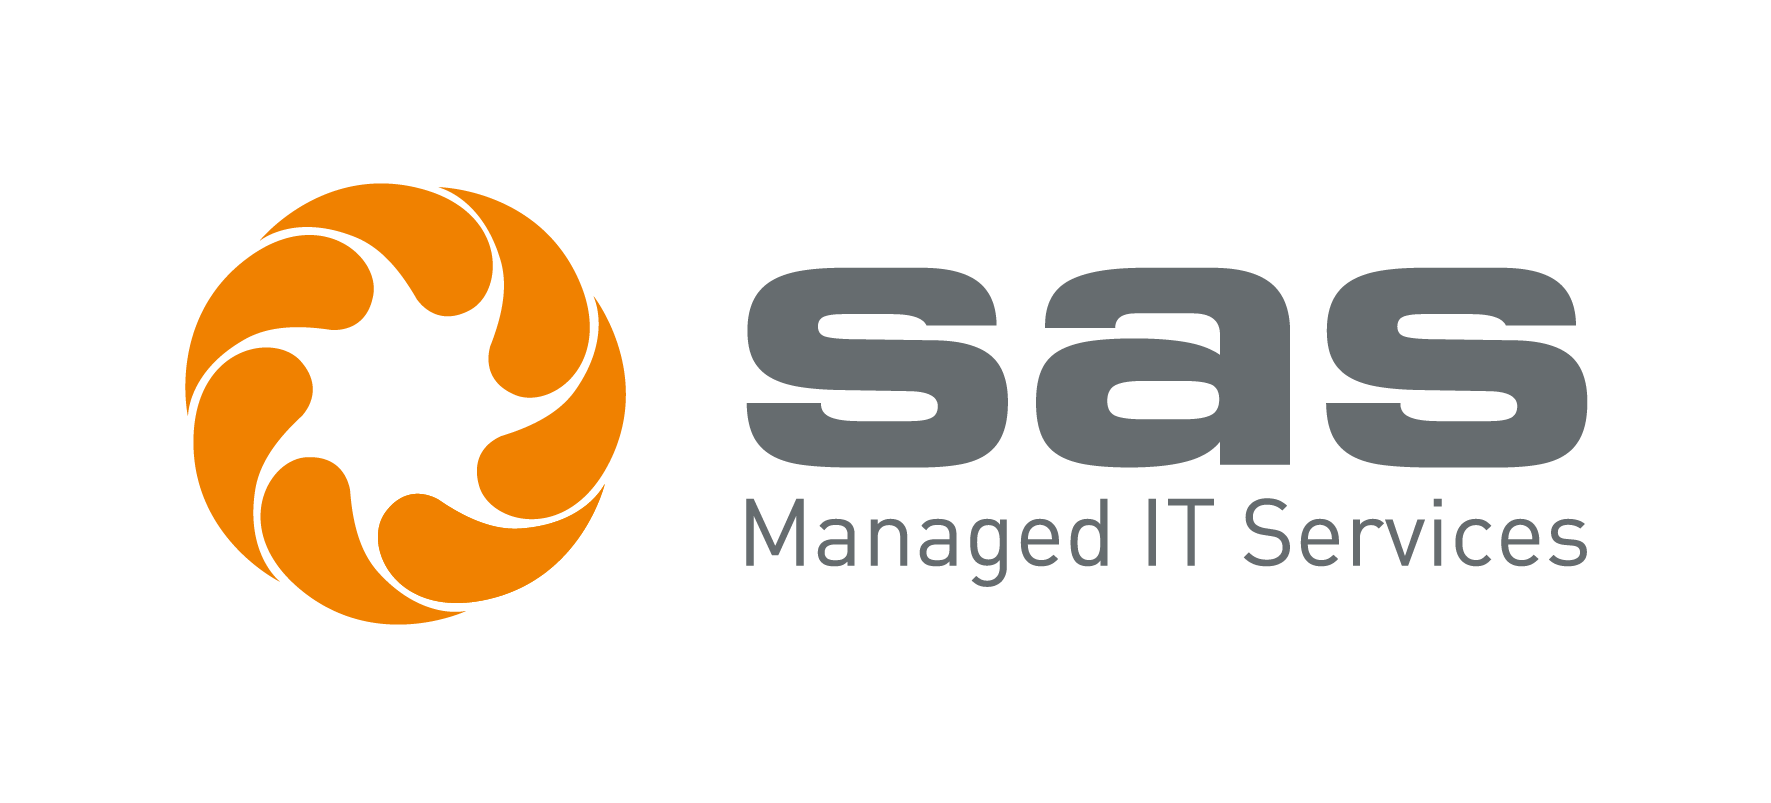 IT Communications Logo - SAS Global Communications Ltd Logo